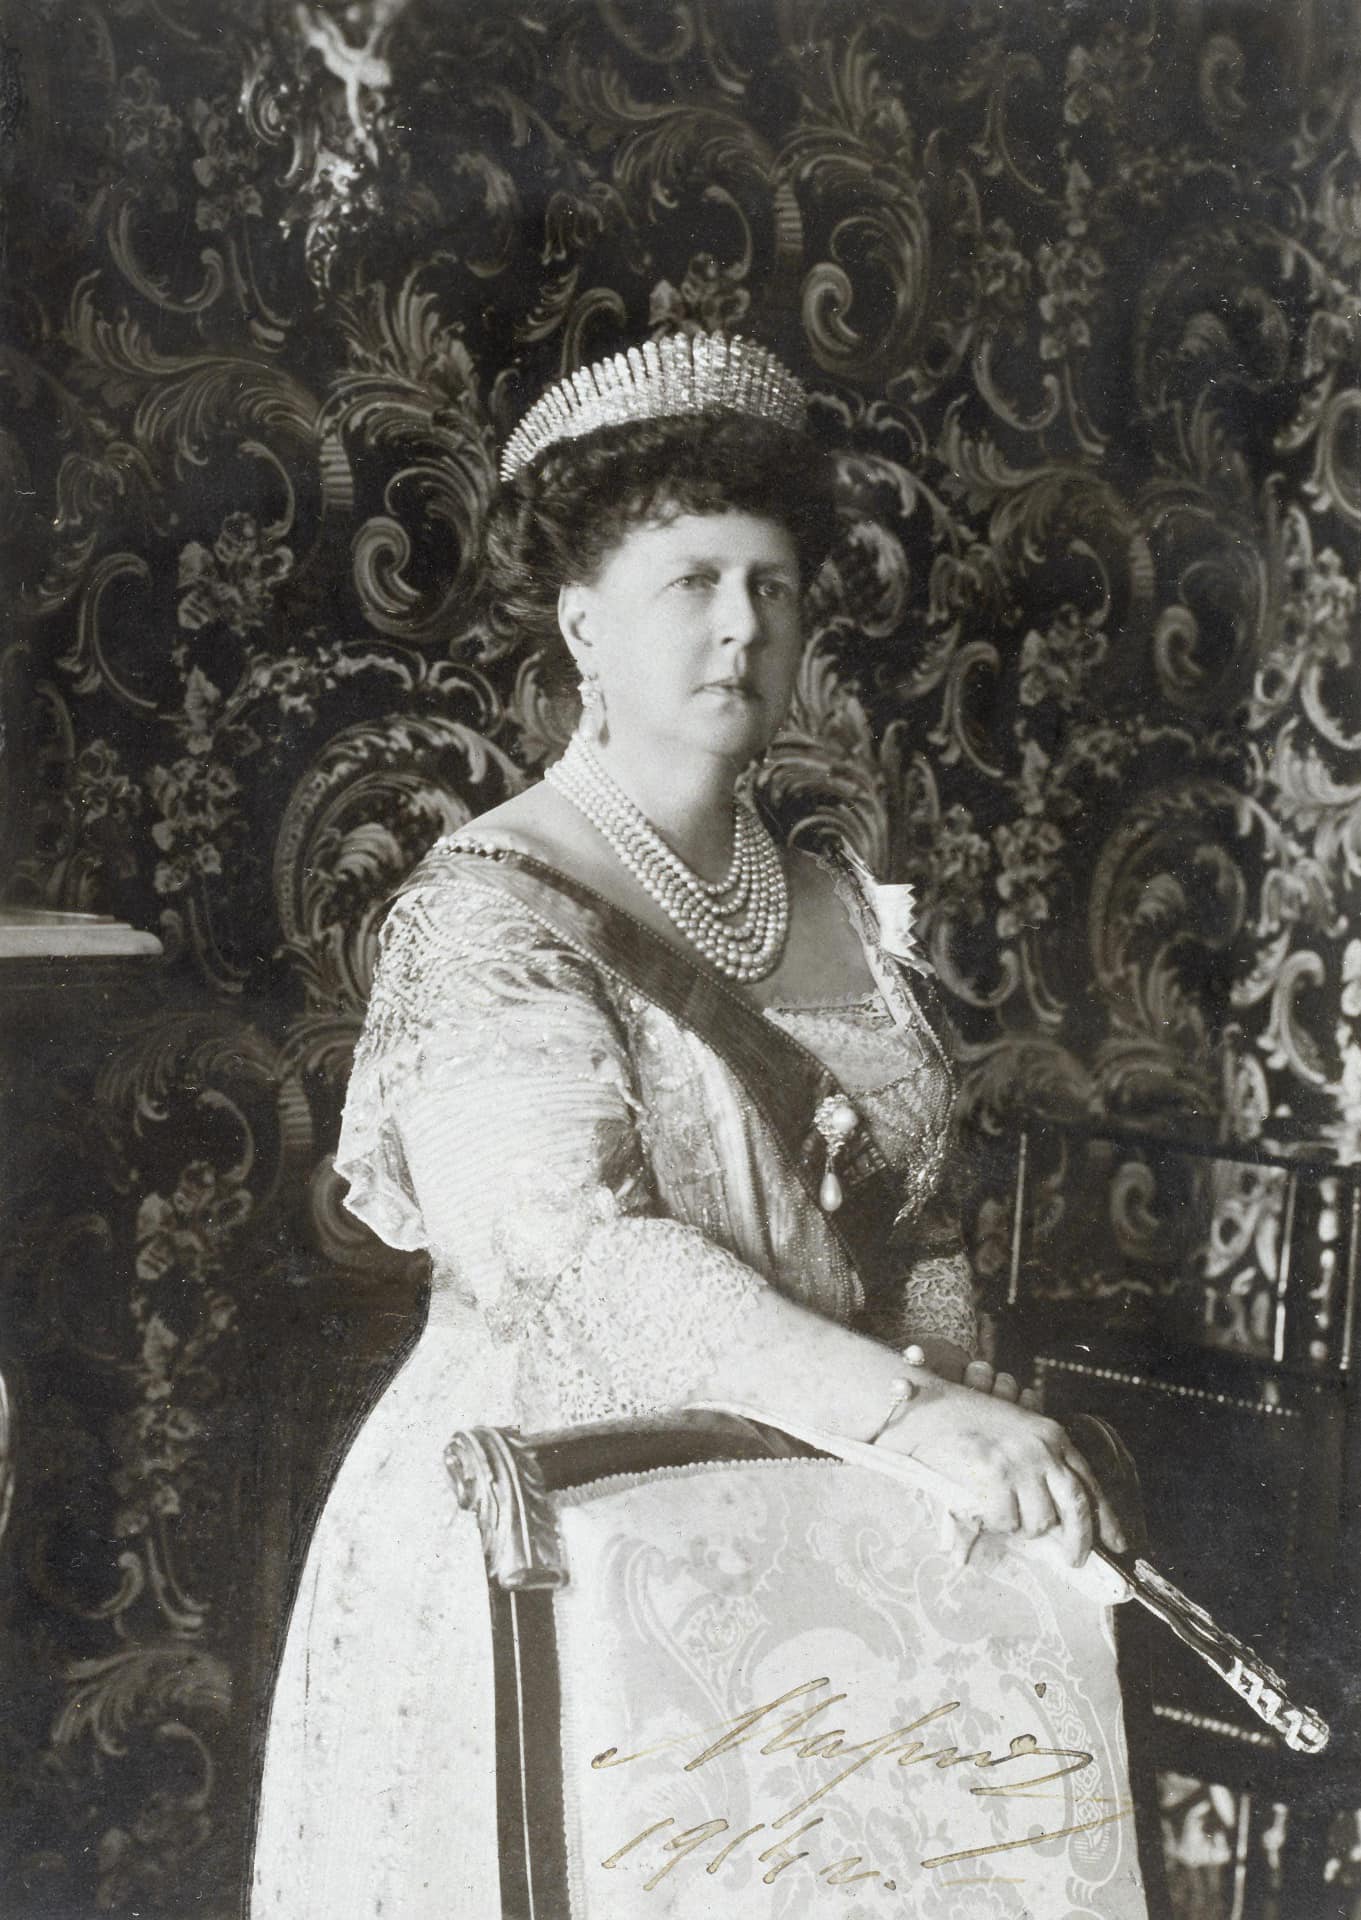 Grand duchess of russia